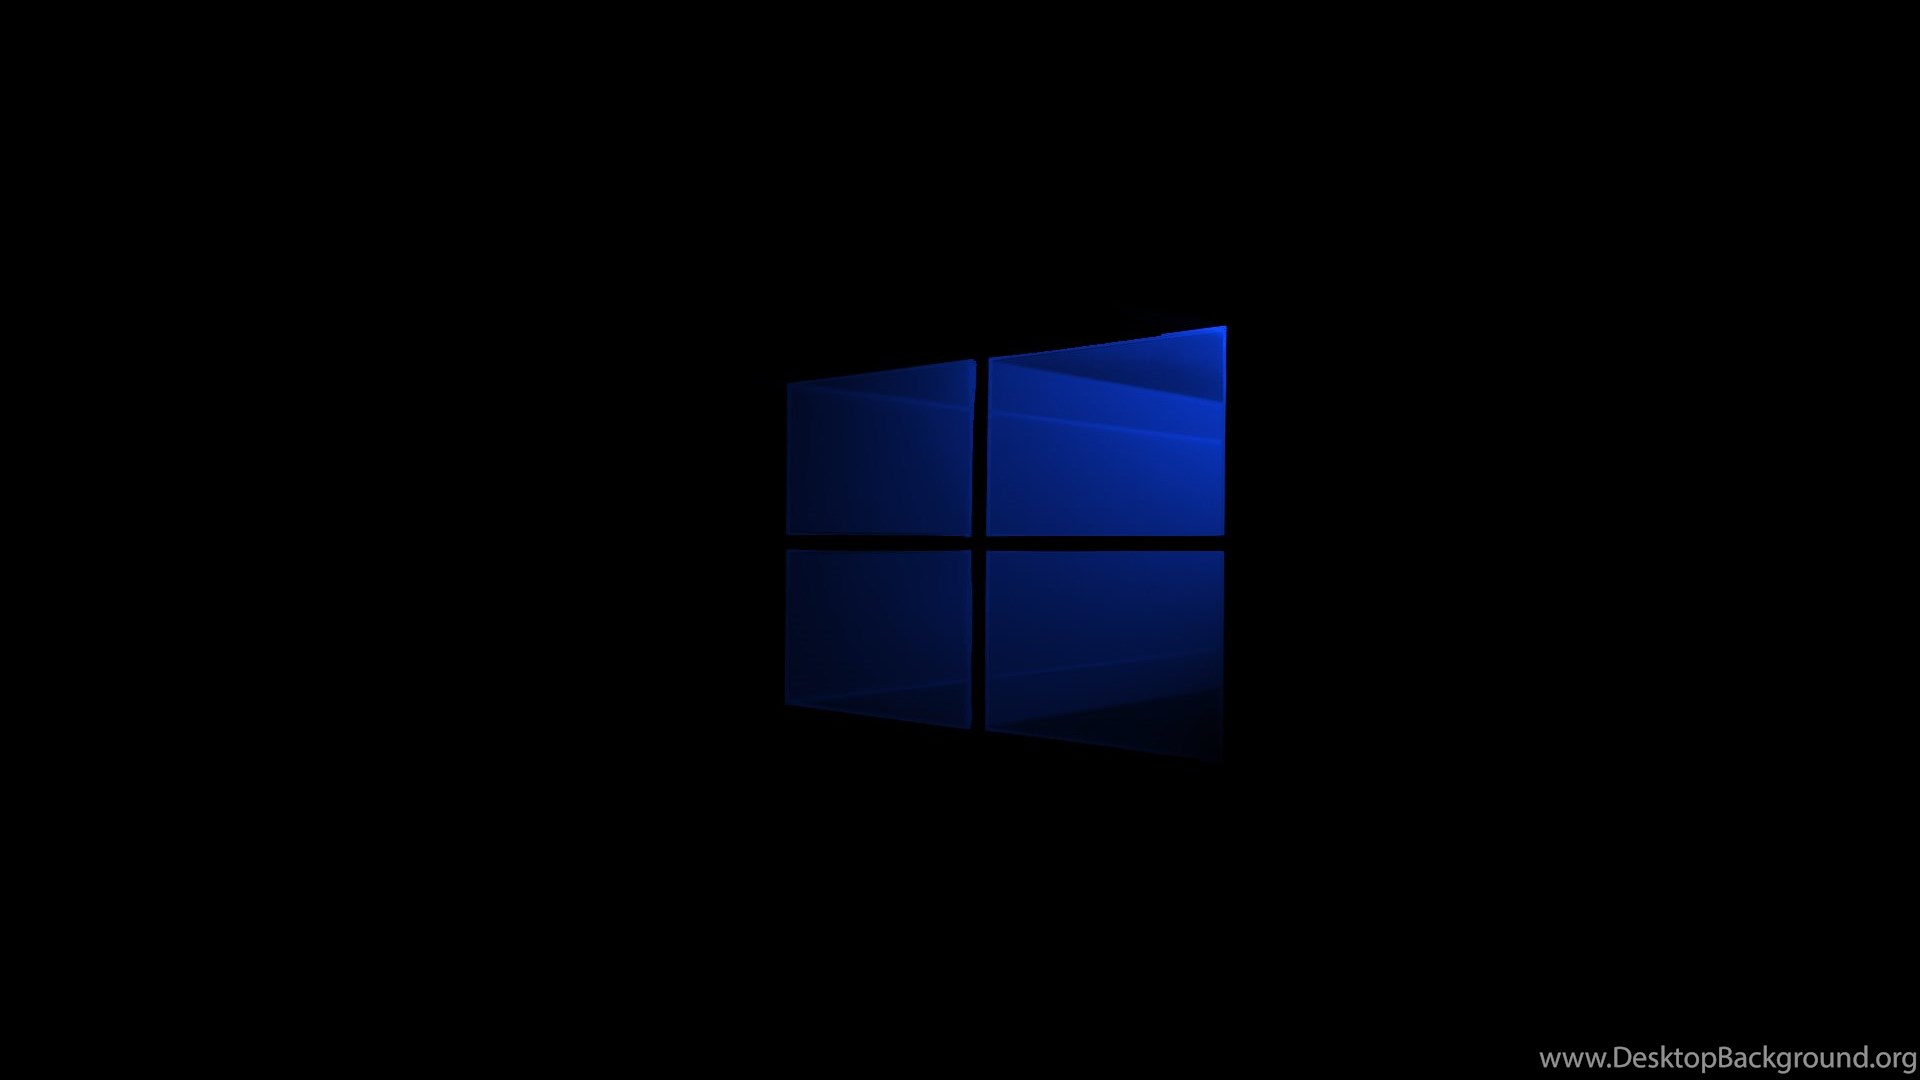 Minimal Windows 10 Wallpapers By Arcadiogarcia On DeviantArt Desktop